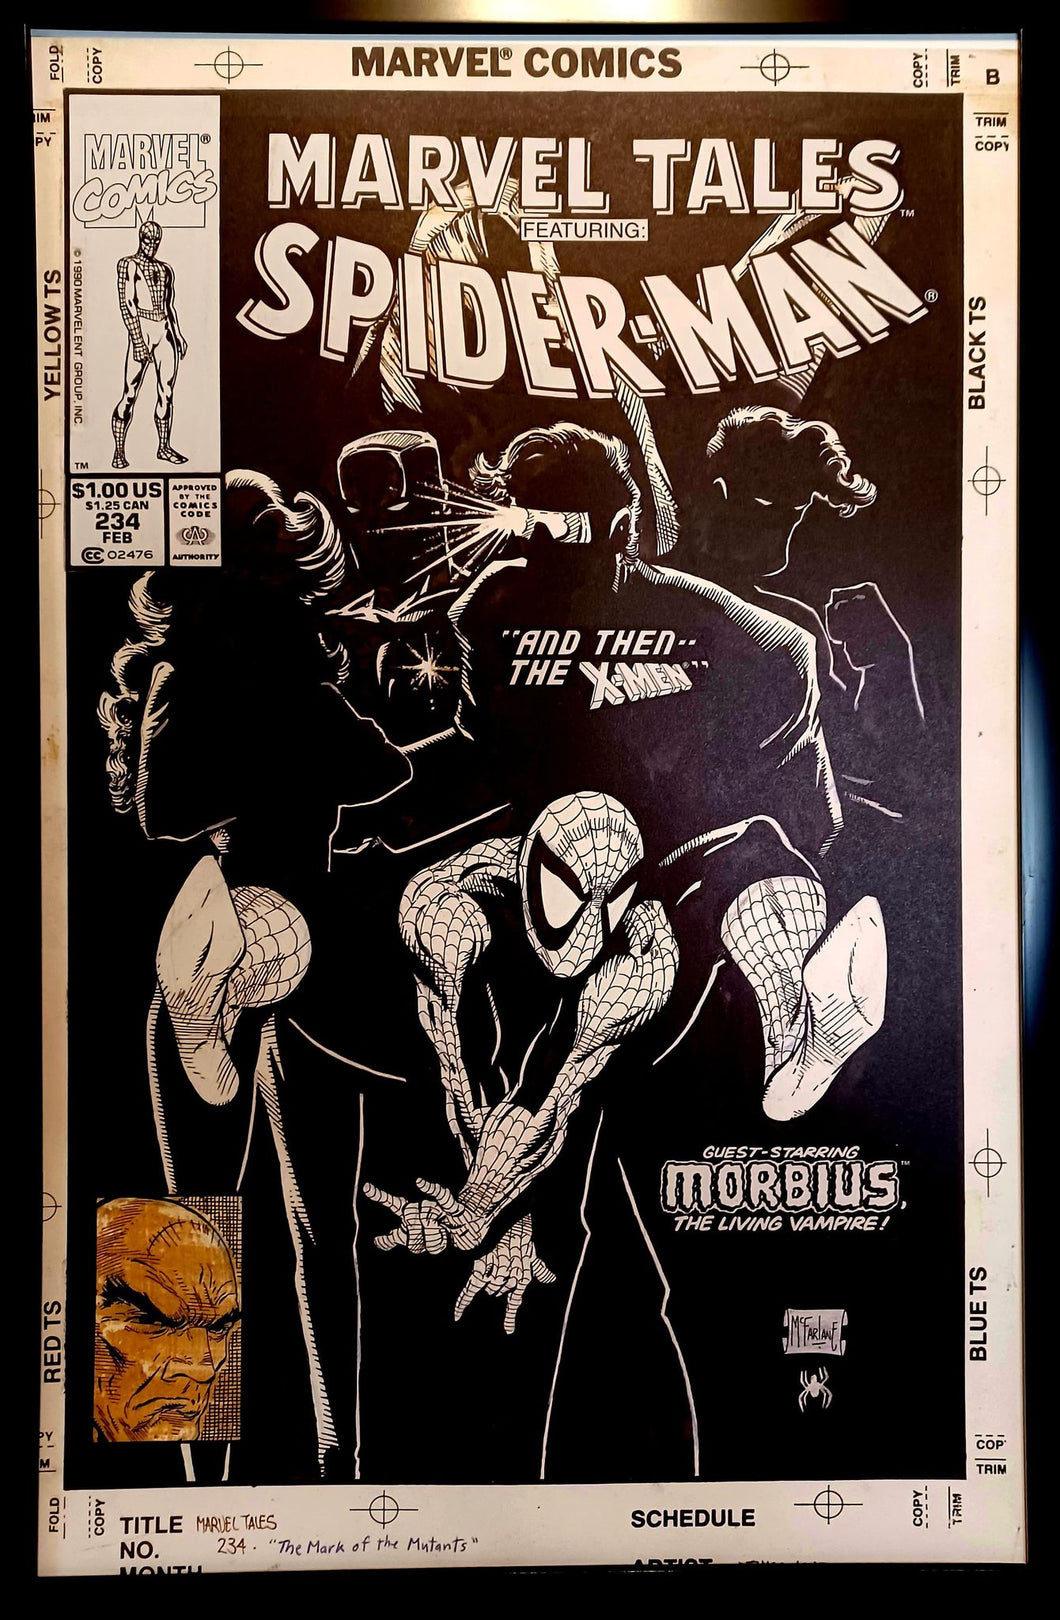 Marvel Tales #234 by Todd McFarlane 11x17 FRAMED Original Art Print Comic Poster